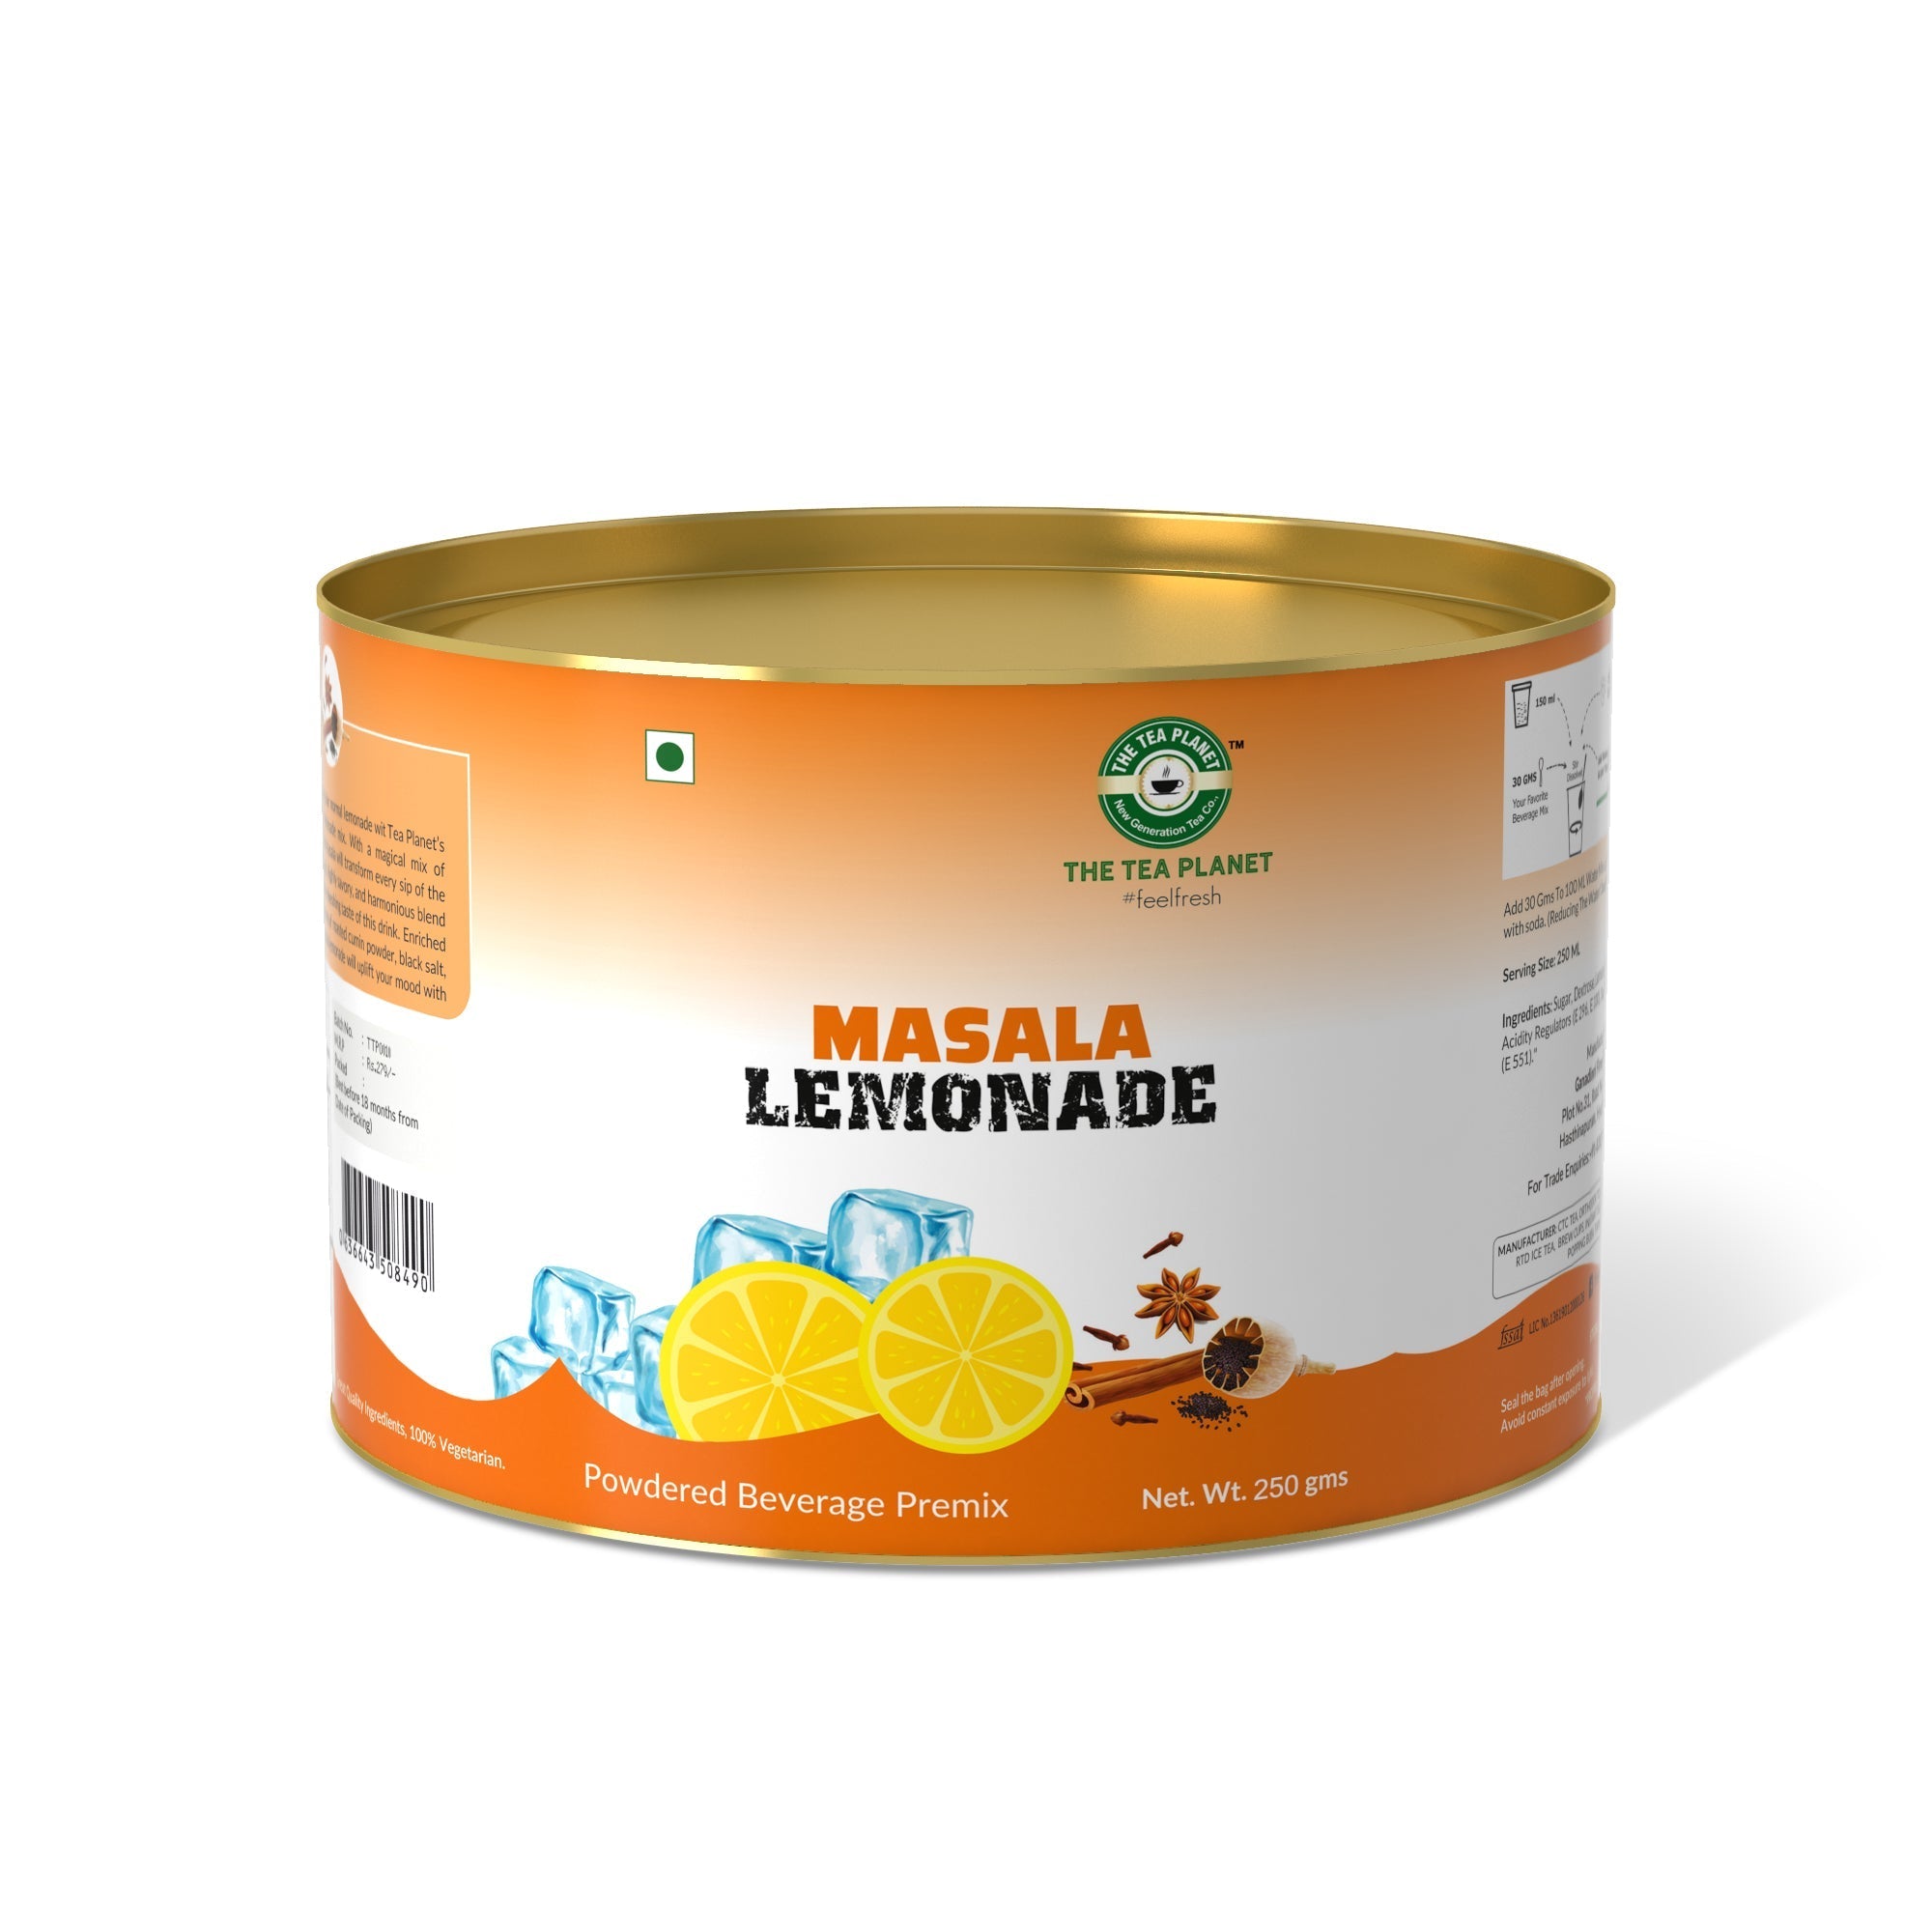 Masala Lemonade Premix - 800 gms